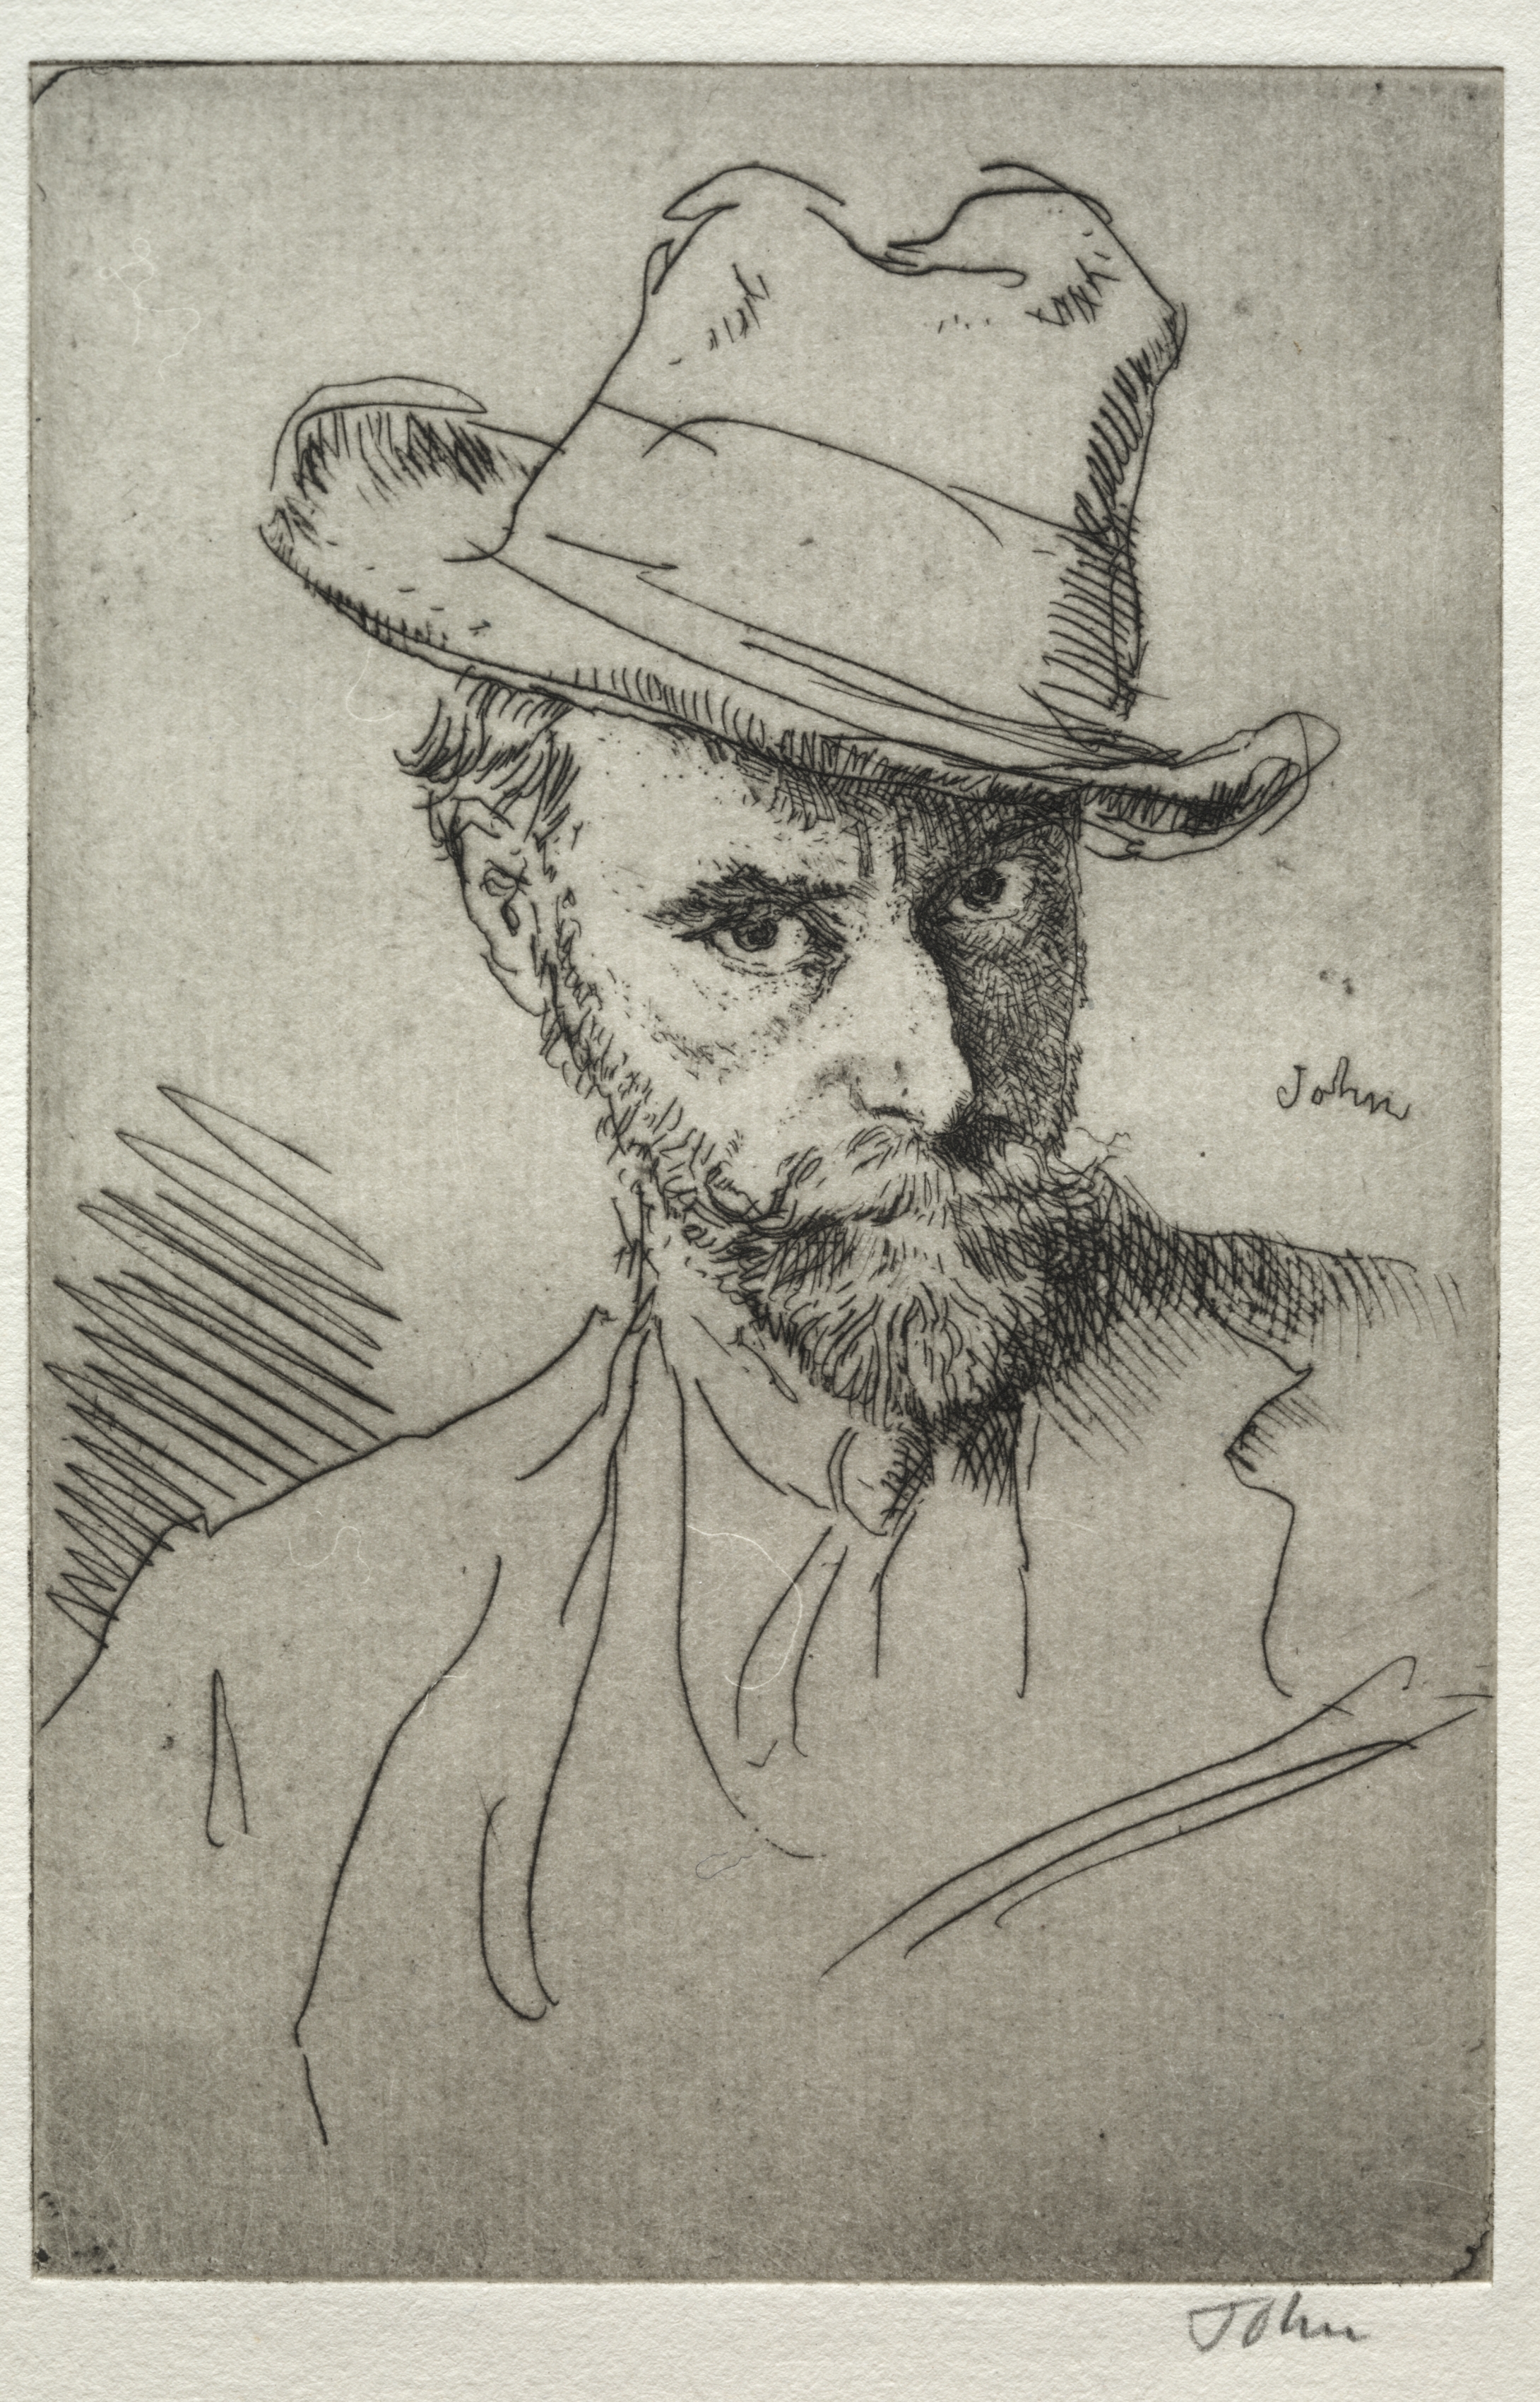 Self-Portrait in a Hat